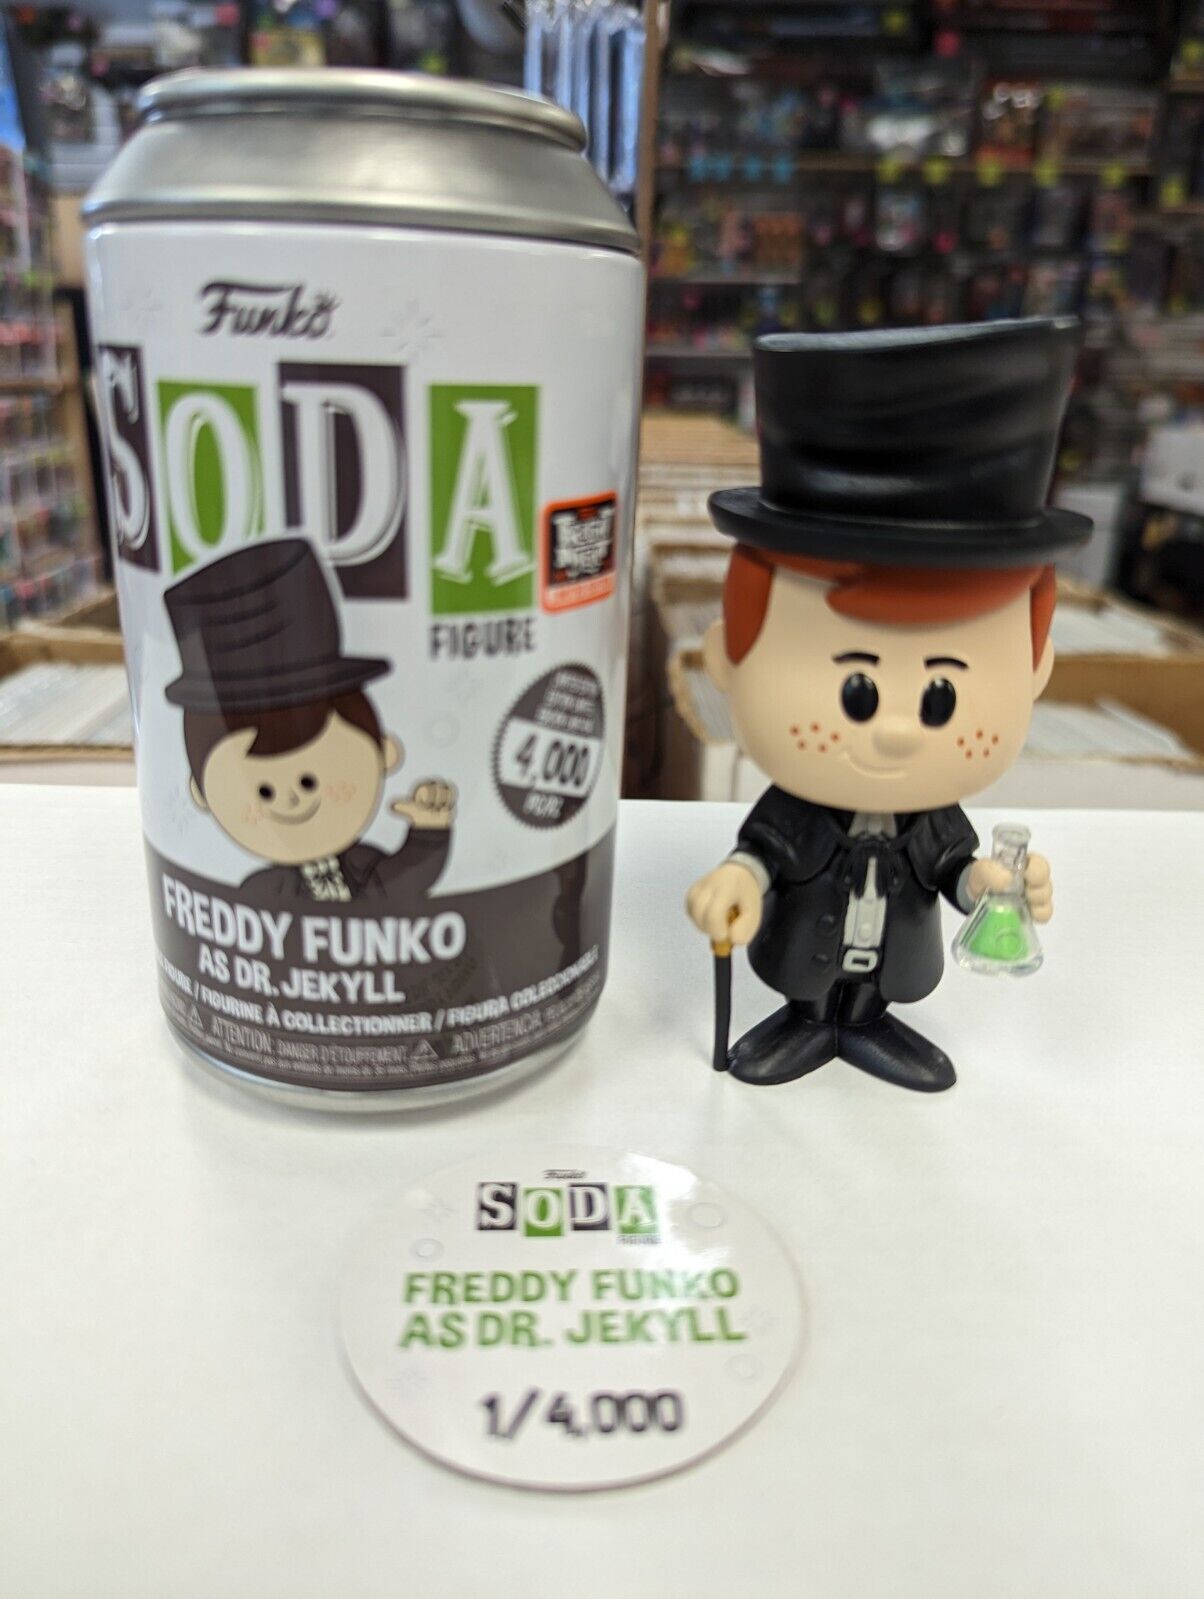 Funko Soda Freddy Funko As Dr. Jekyll 1/4000 Fright Night